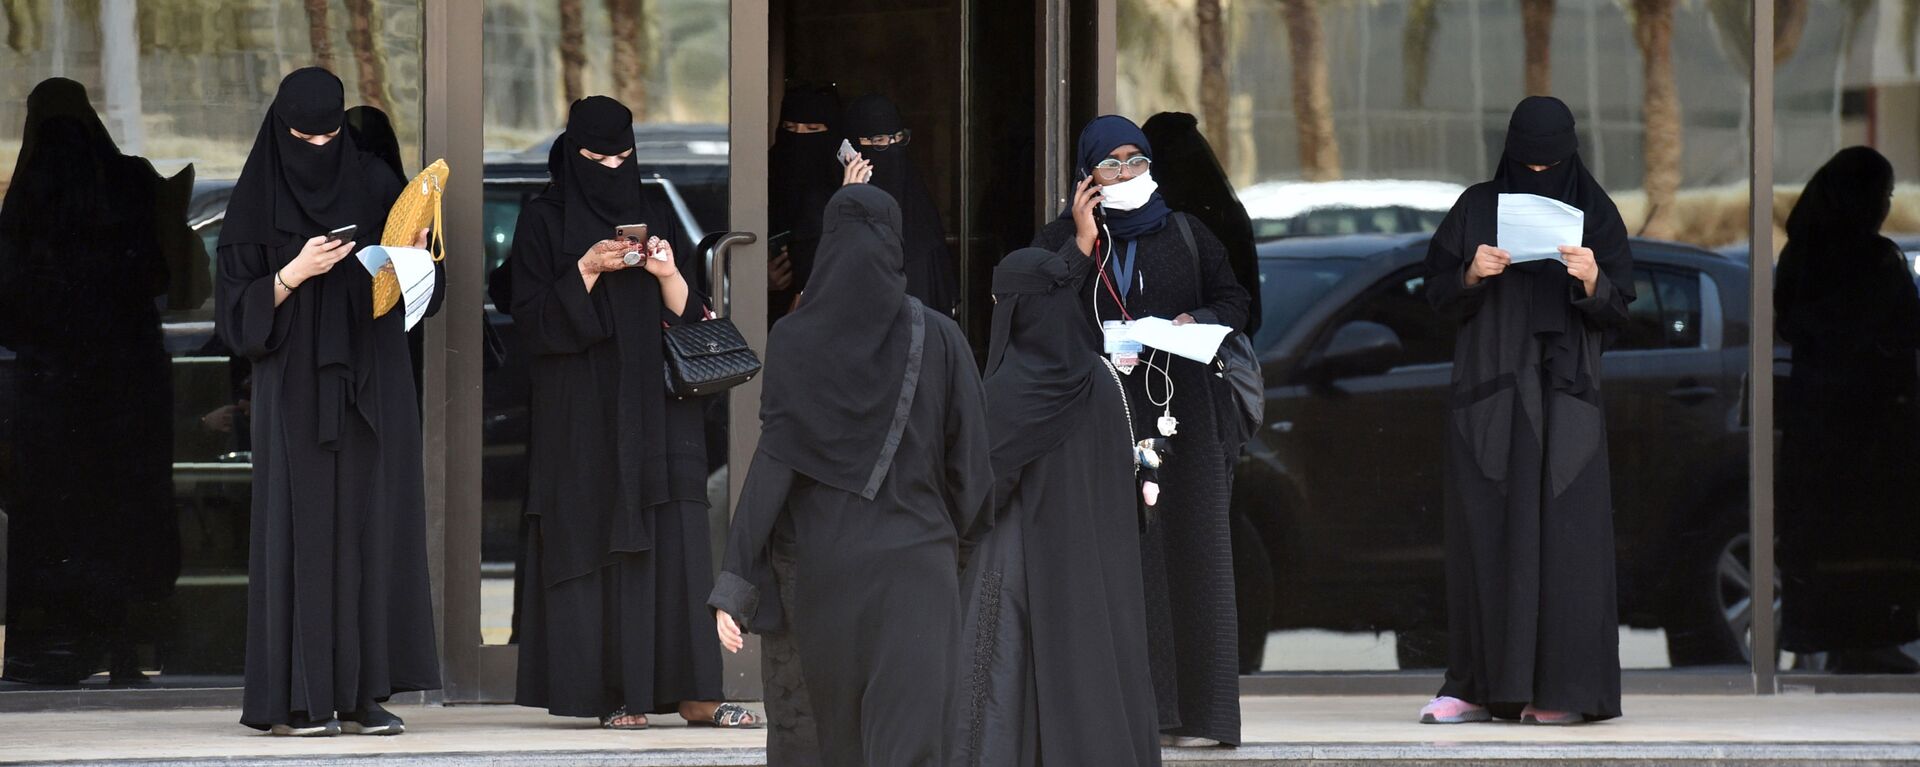 نساء سعوديات، 24 يونيو 2019 - سبوتنيك عربي, 1920, 15.05.2021